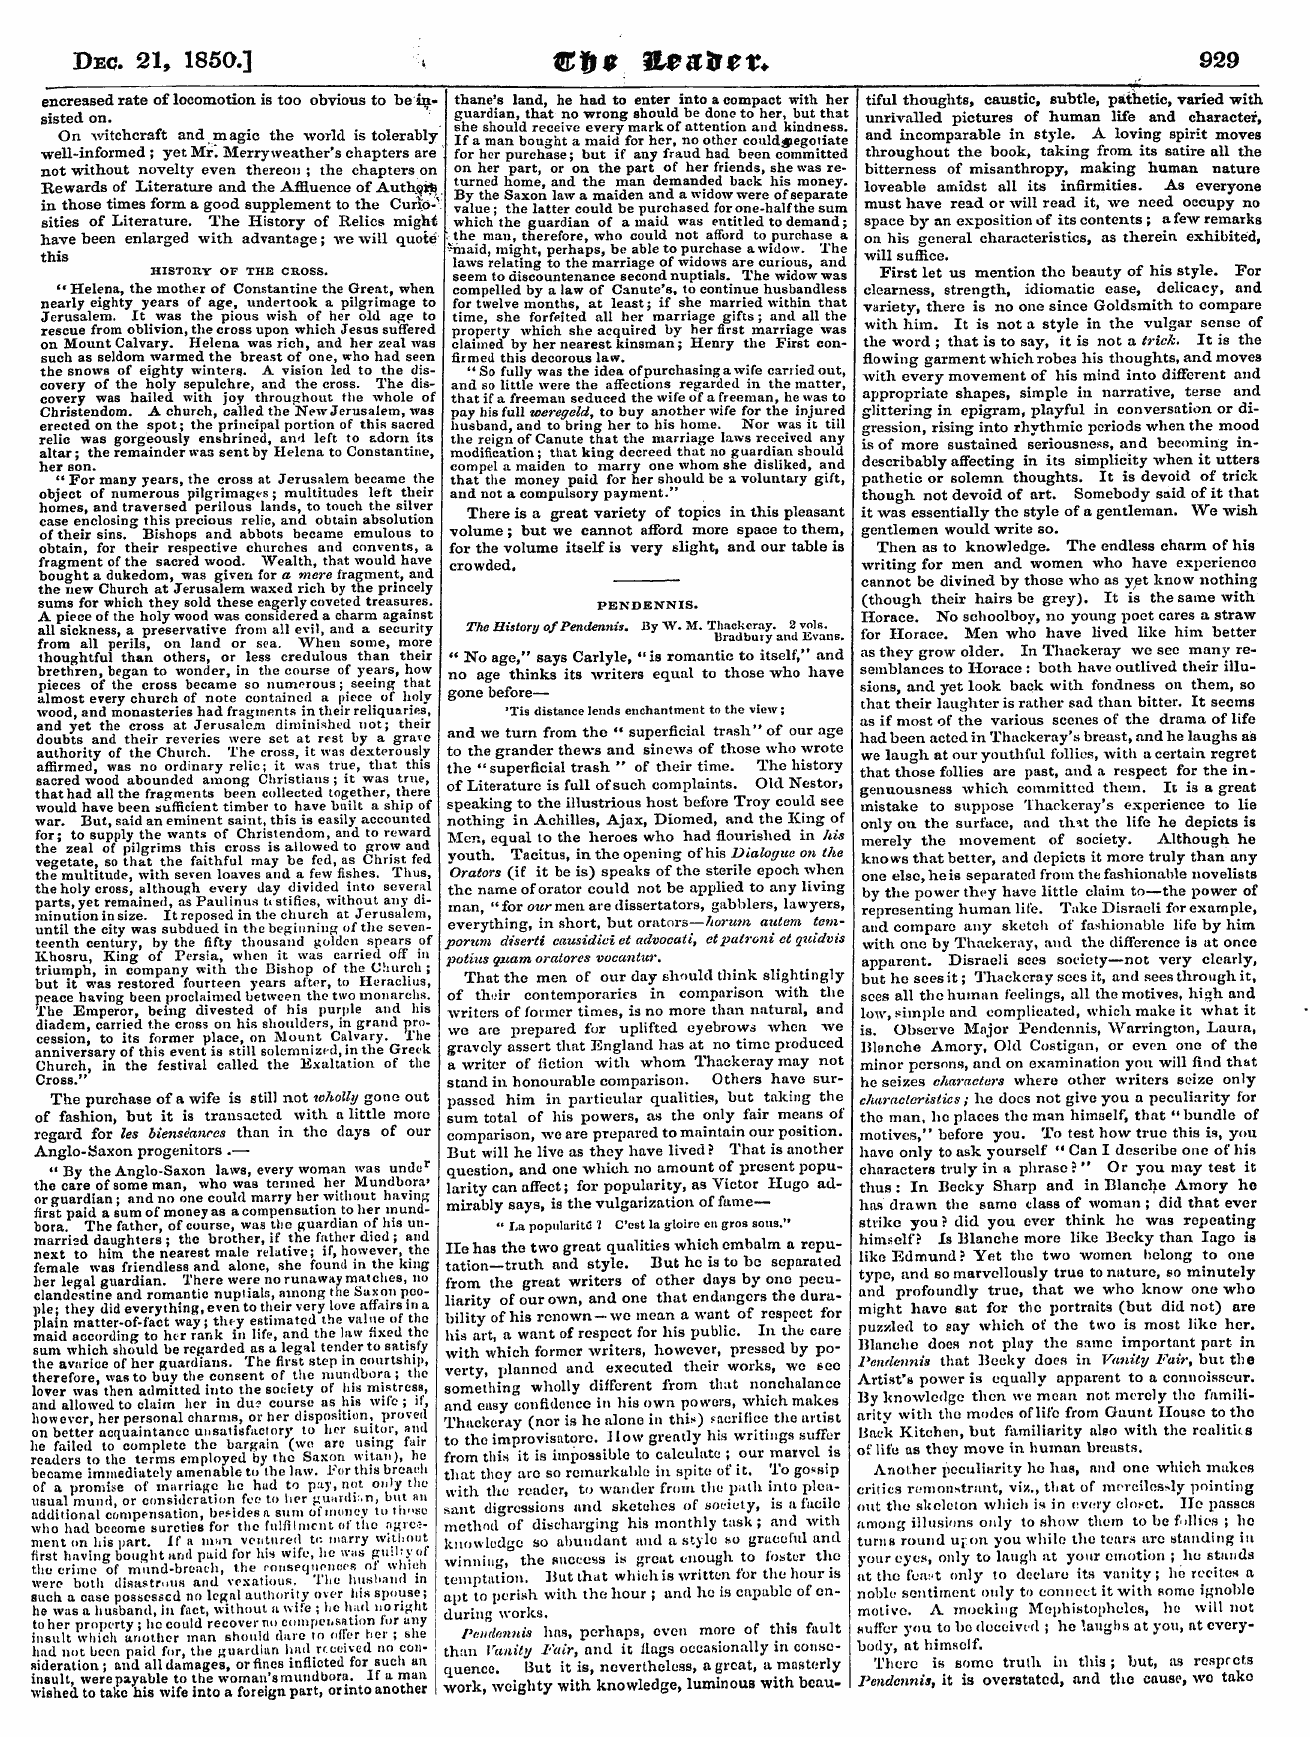 Leader (1850-1860): jS F Y, Country edition - Dec 21, 1850.] \ Ffiftlt Olwlxstt* 929